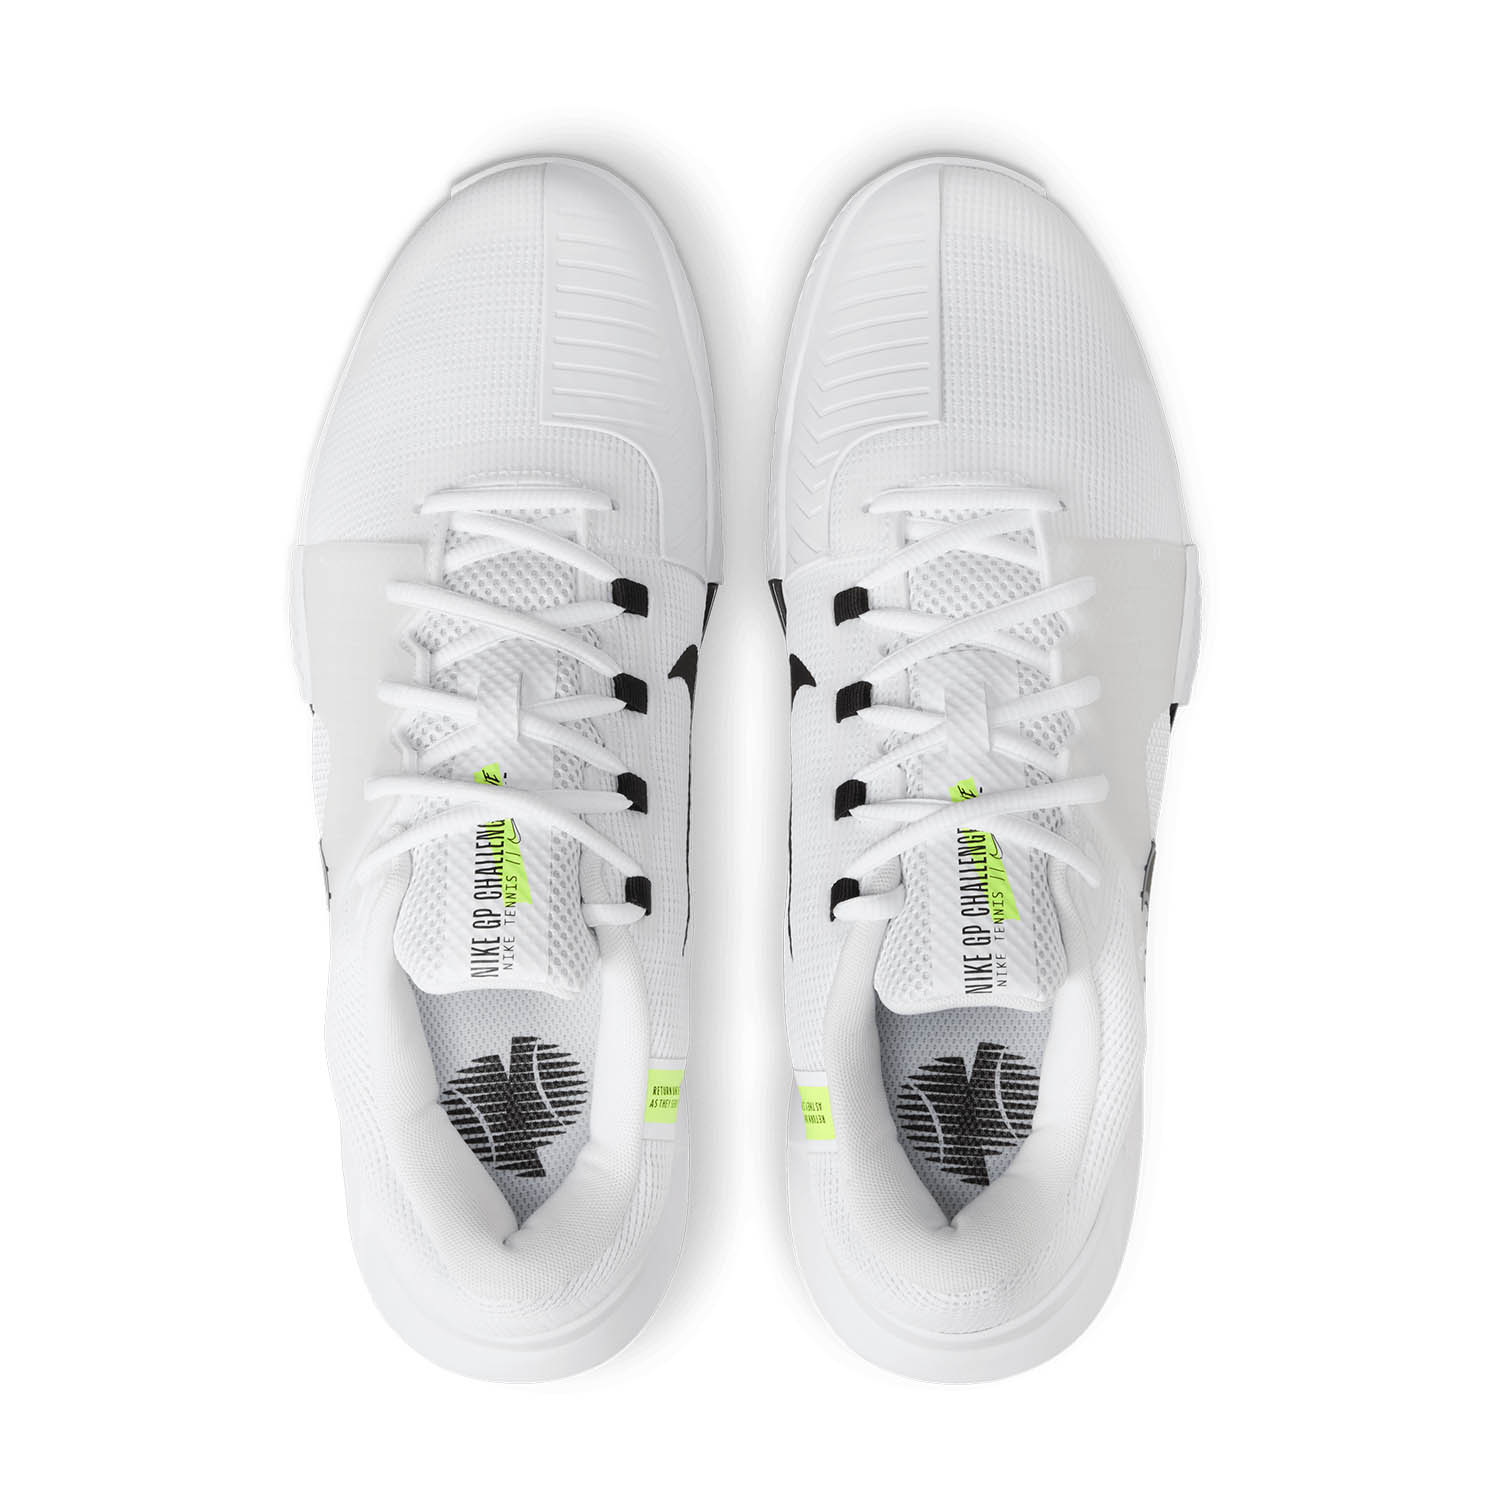 Nike Zoom GP Challenge 1 HC Men's Tennis Shoes - White/Black